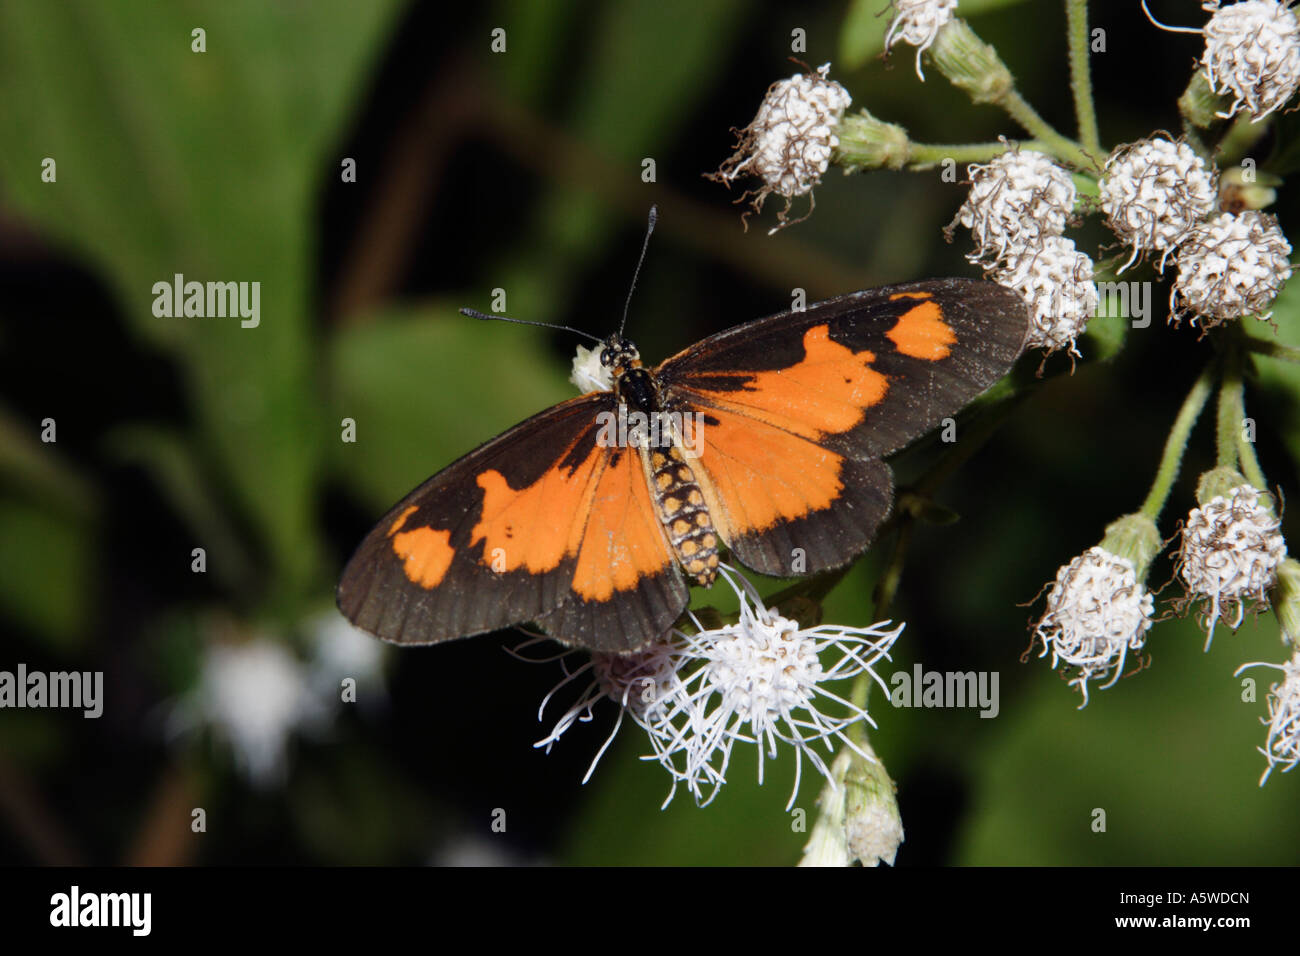 Butterfly Acraea acerata Acraeidae on flowers in rainforest Cameroon Stock Photo